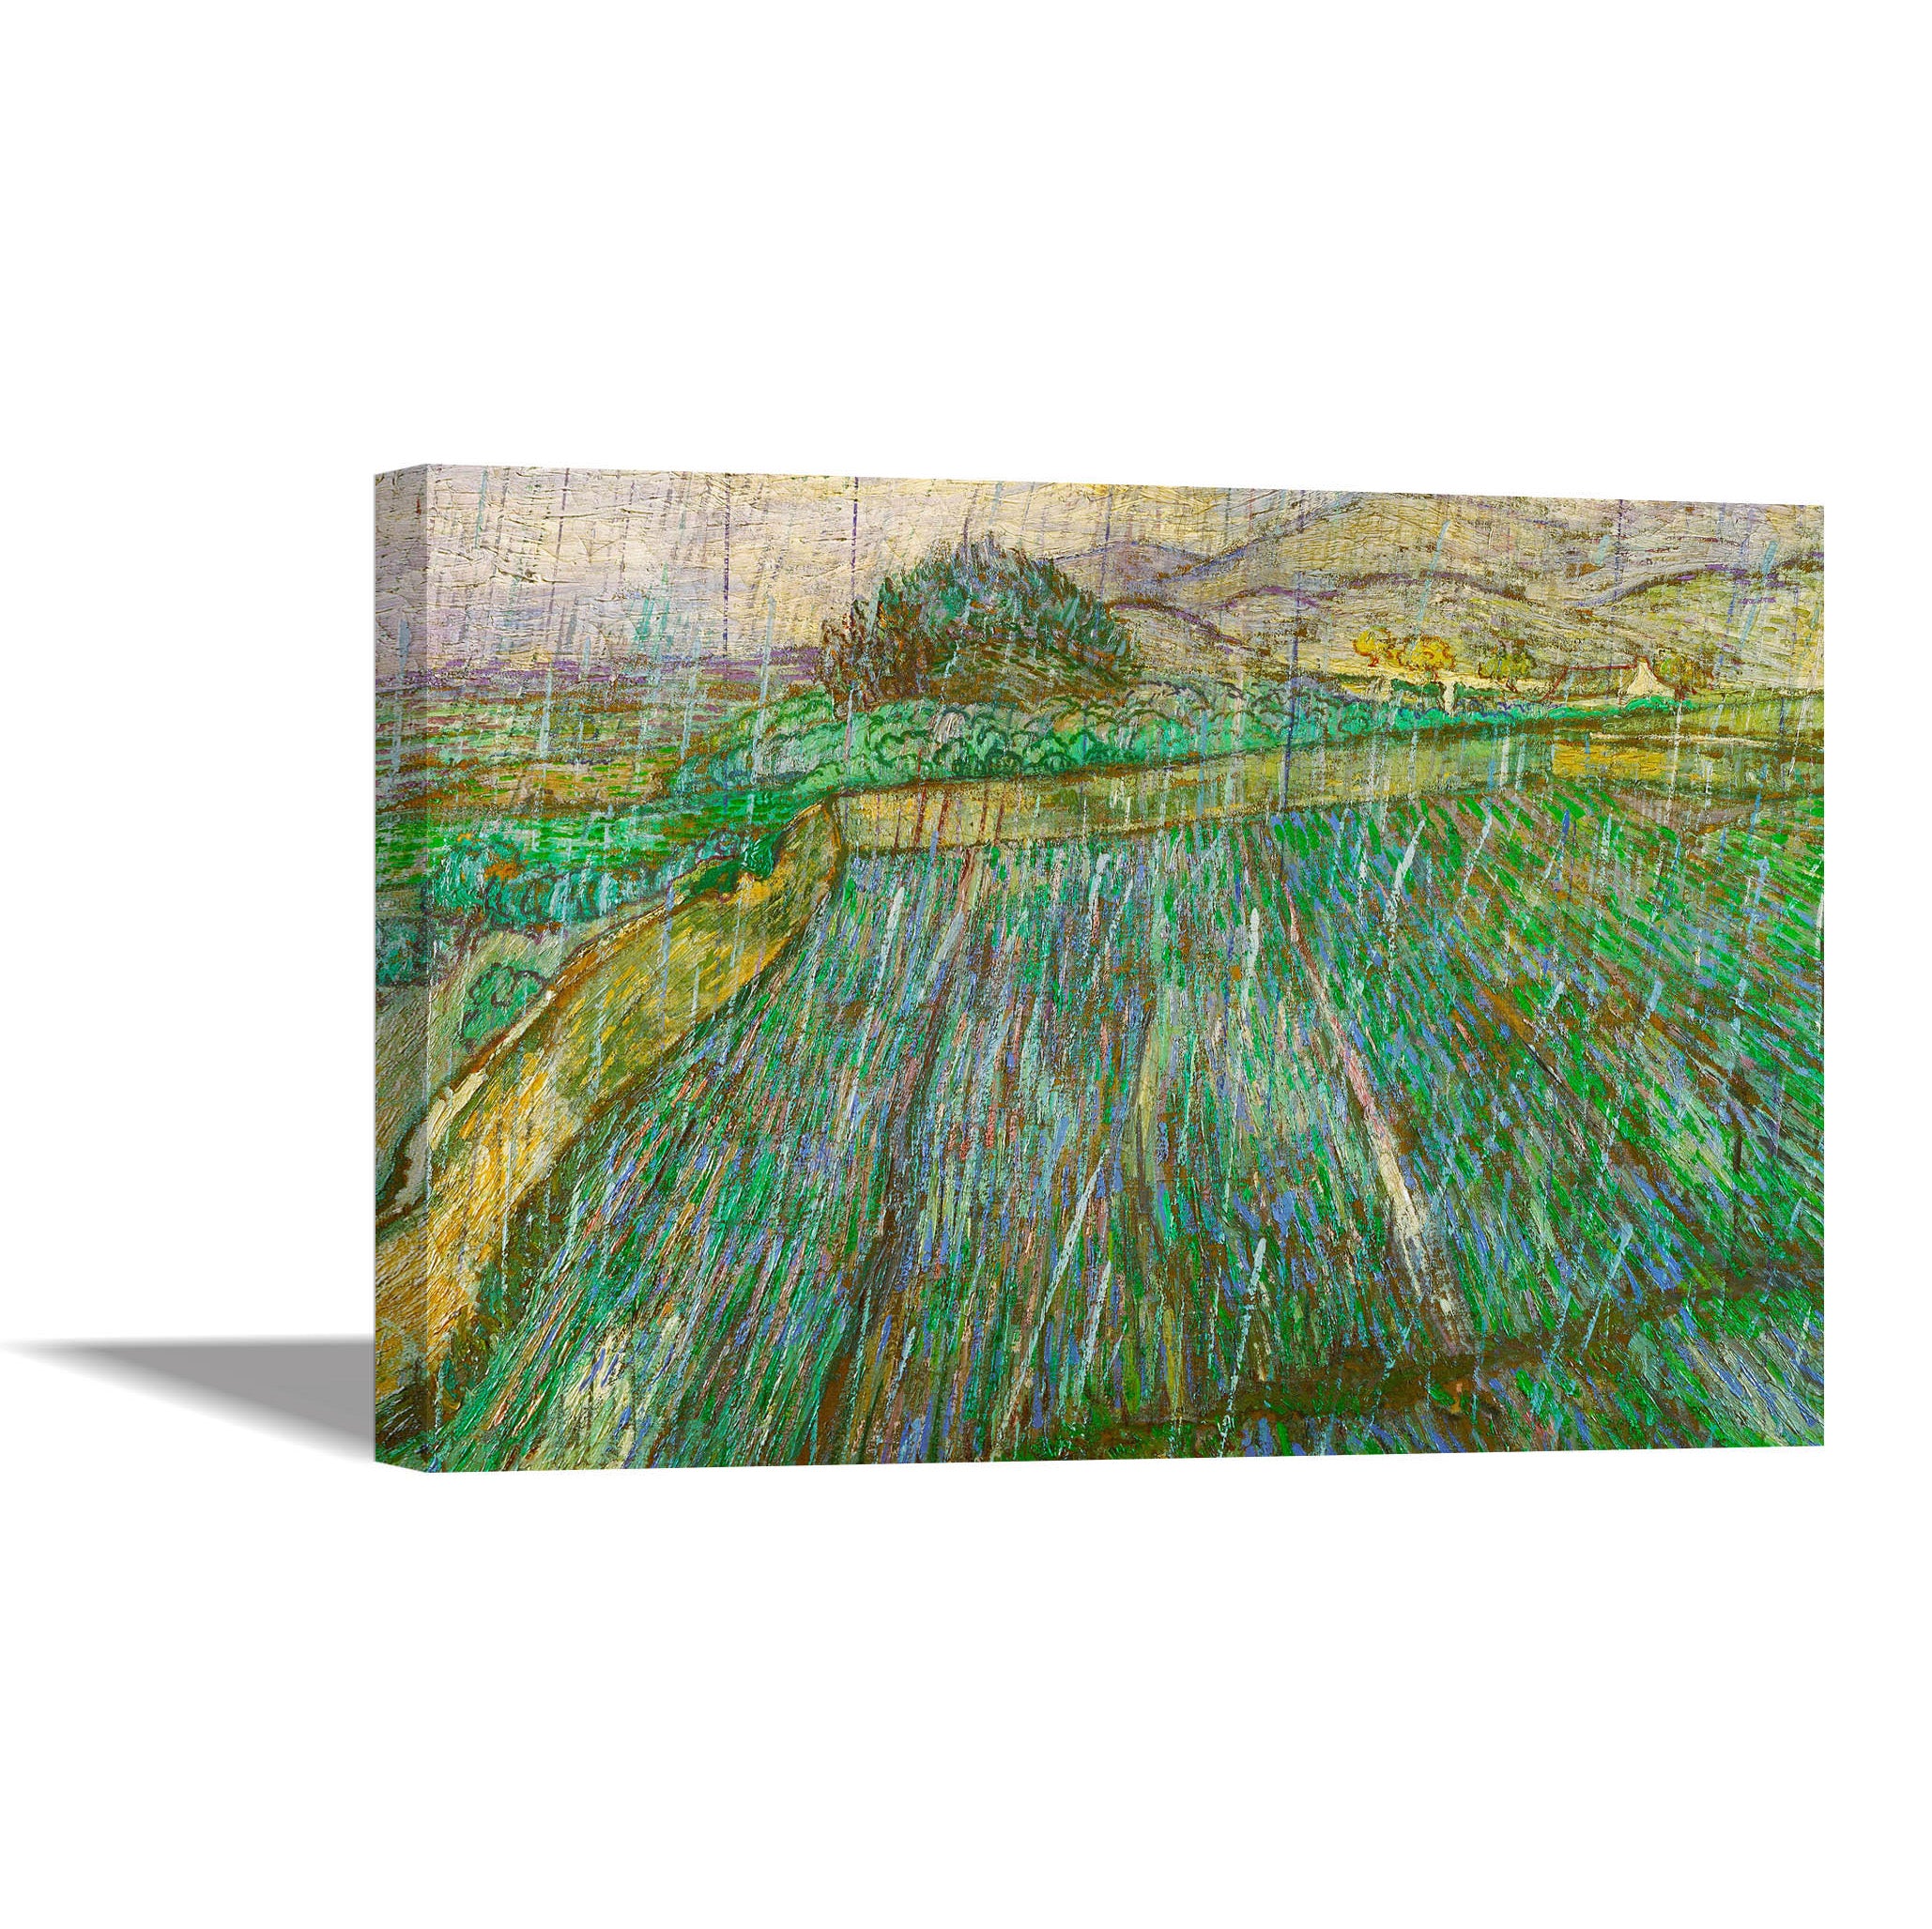 Enclosed Wheat Field in the Rain